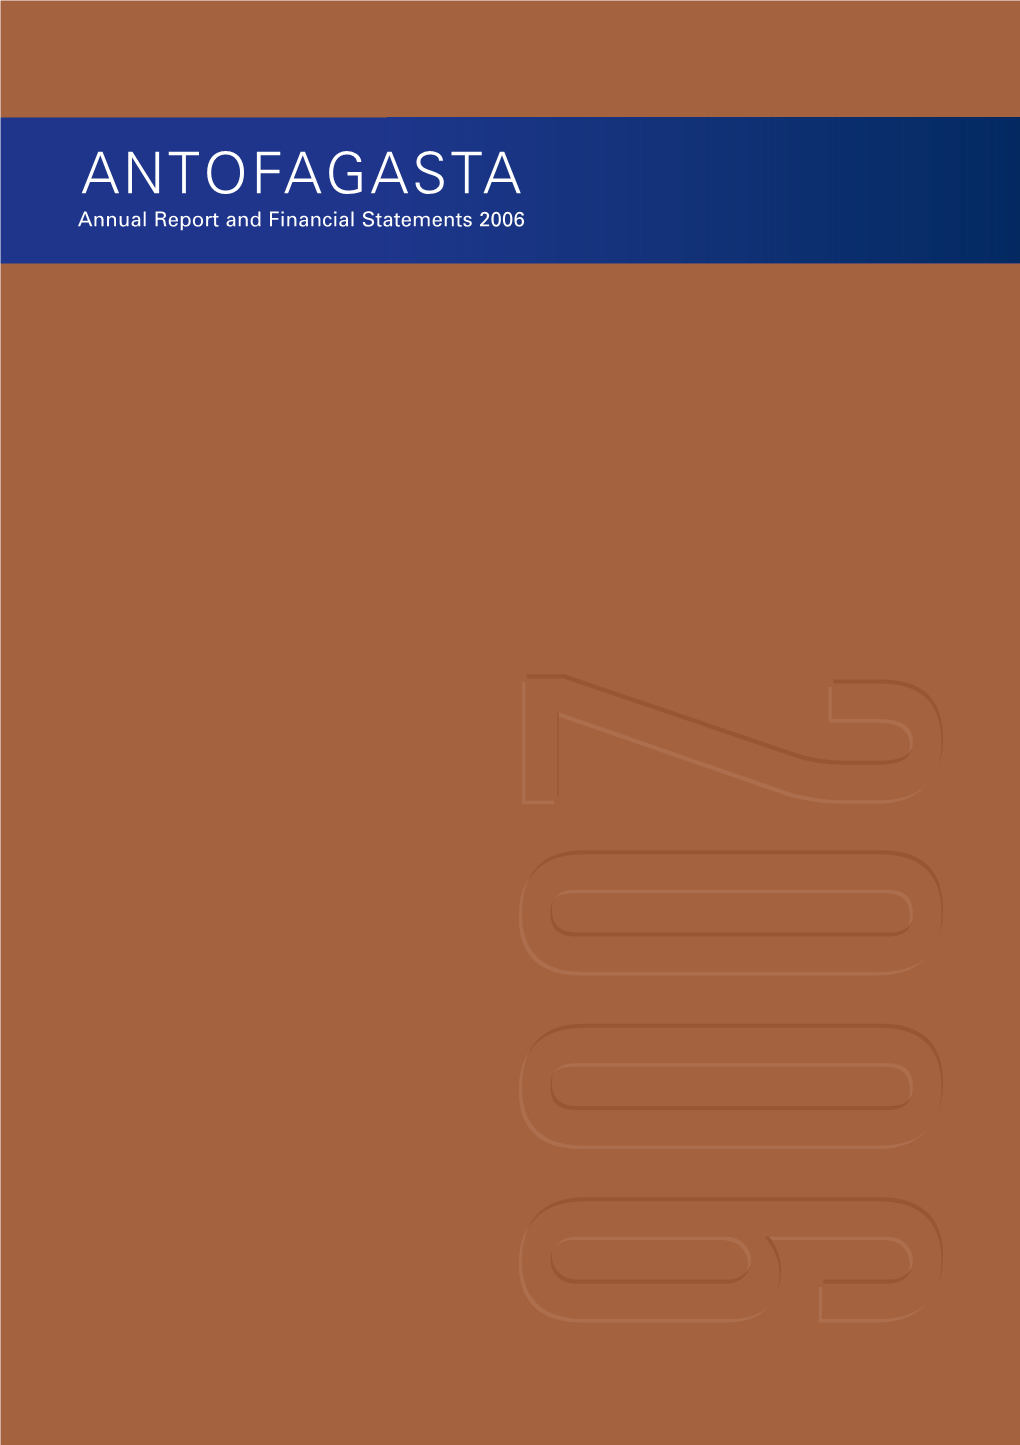 ANTOFAGASTA Annual Report and Financial Statements 2006 and Financial Statements Annual Report